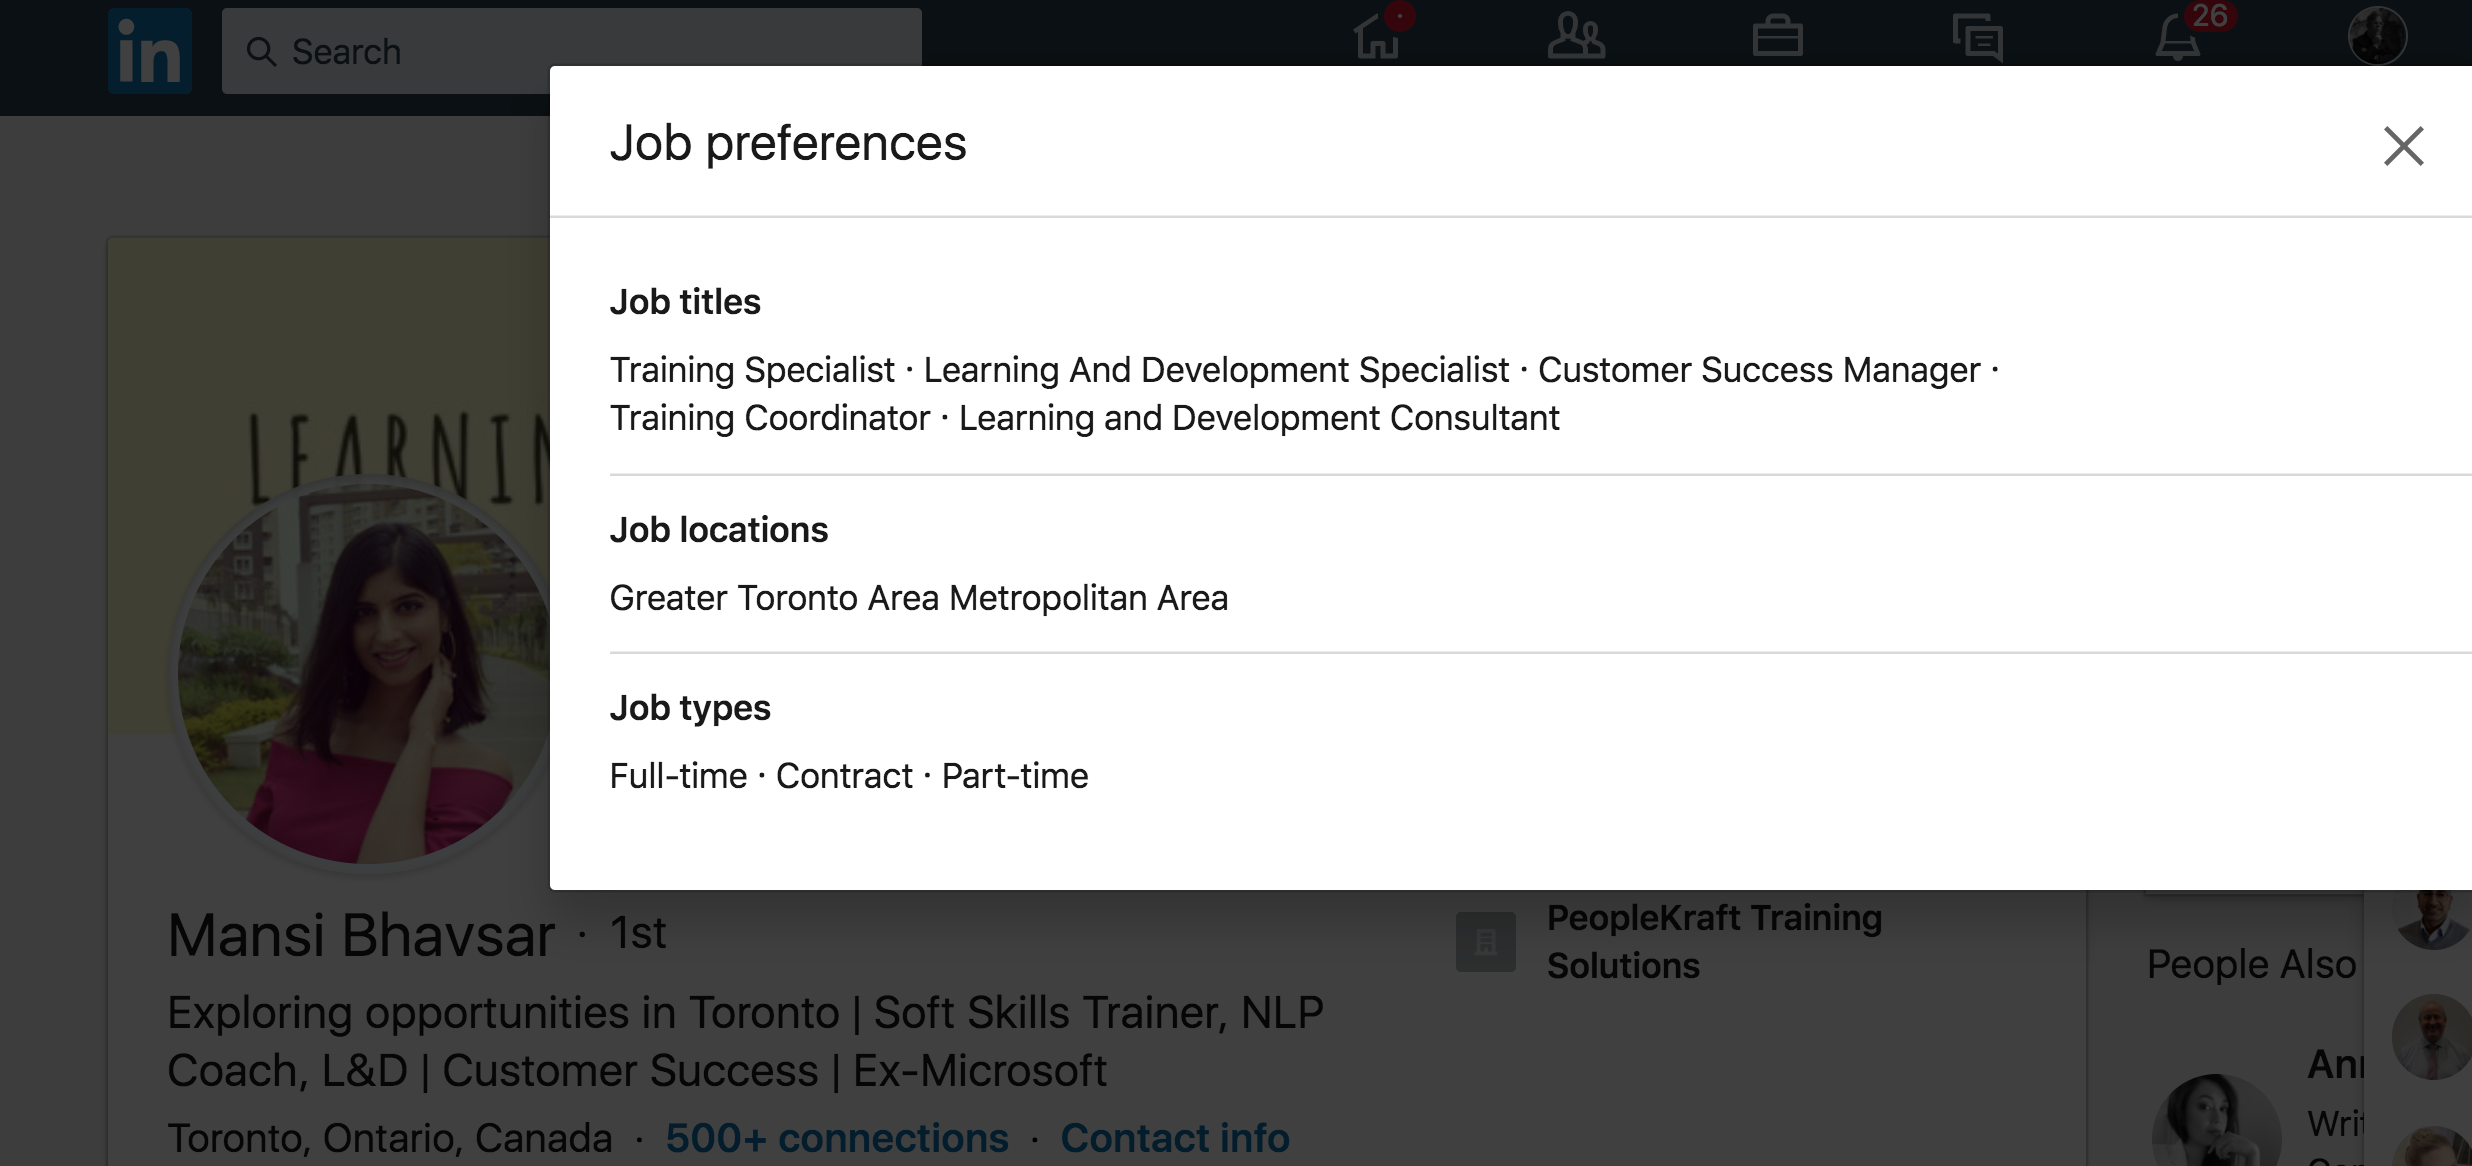 Adding job preferences to LinkedIn